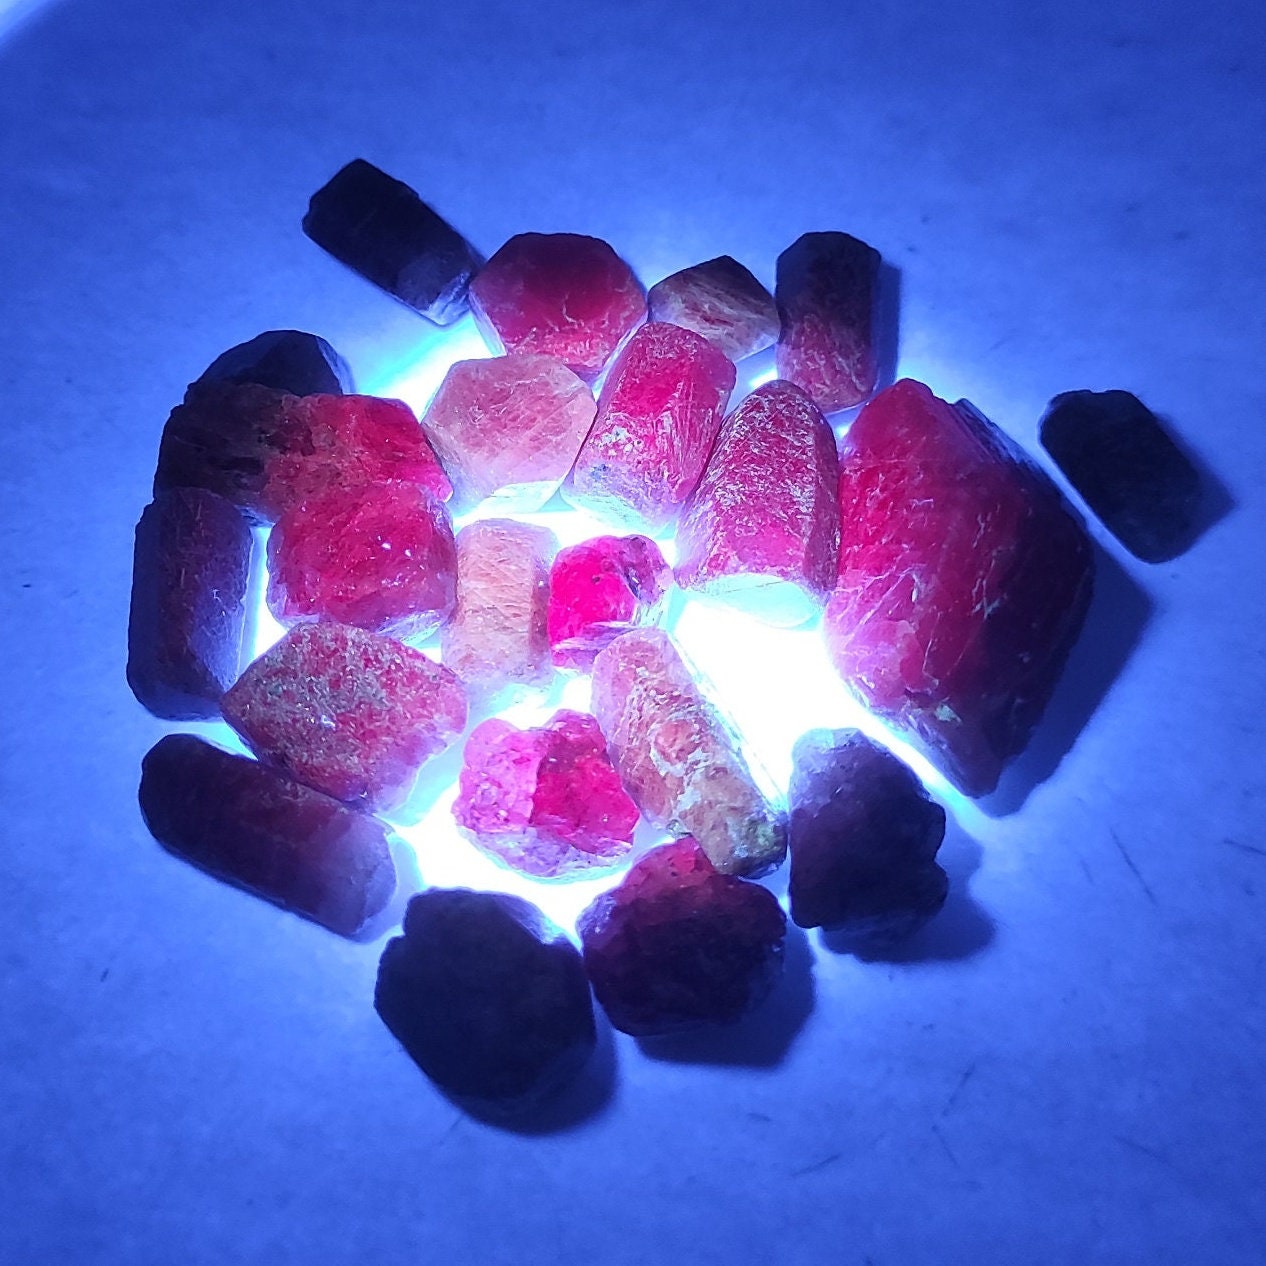 128ct Untreated Ruby Lot - Unheated Ruby Gemstones - Raw Red Ruby from Madagascar - Rough Rubies Gems - Loose Ruby Gemstones - Rough Gems